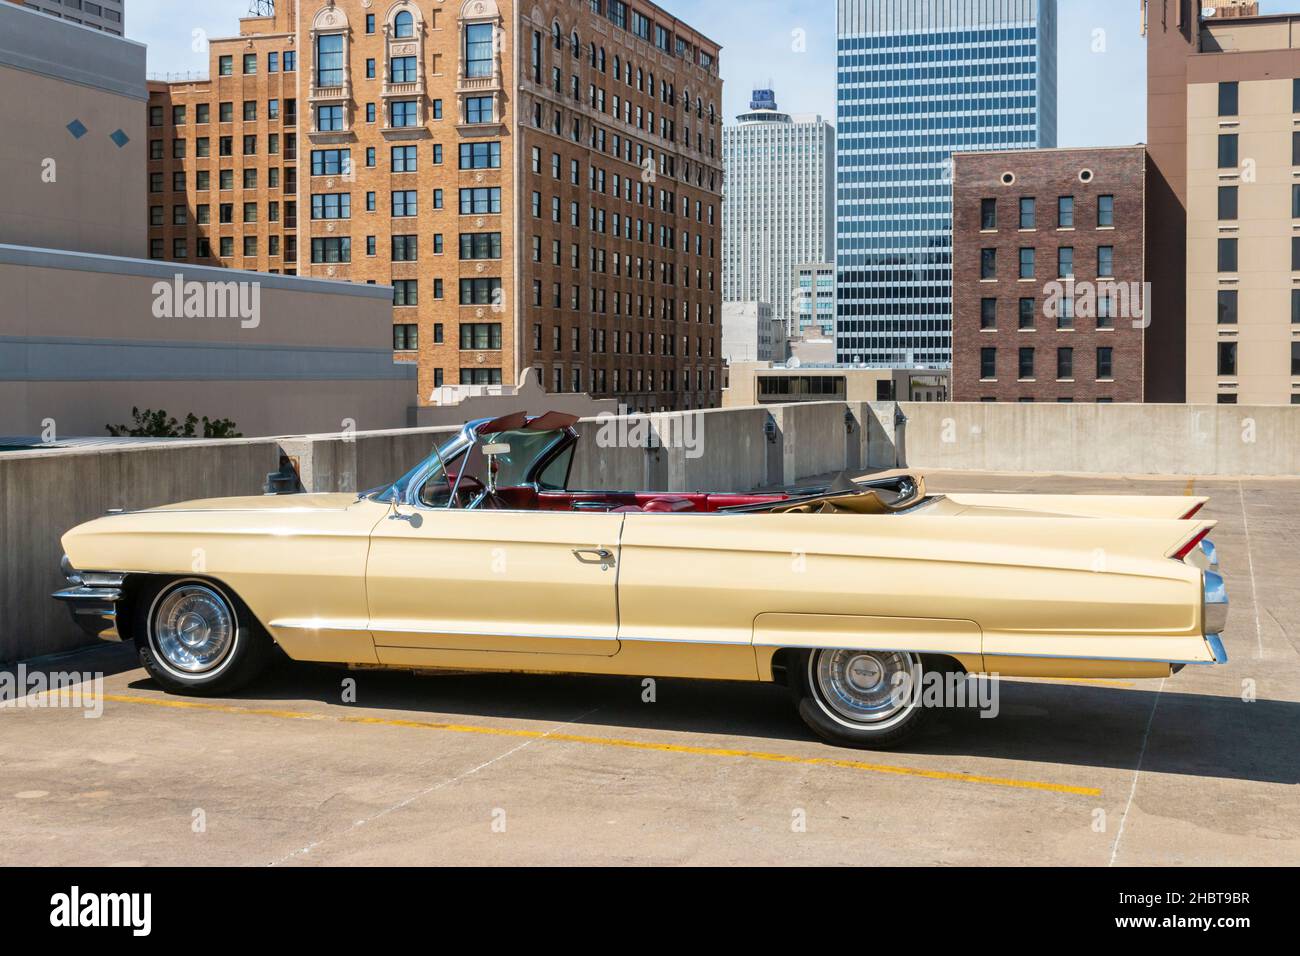 cream coloured 1962 vintage Cadillac coupe de ville parked on a car park roof Stock Photo